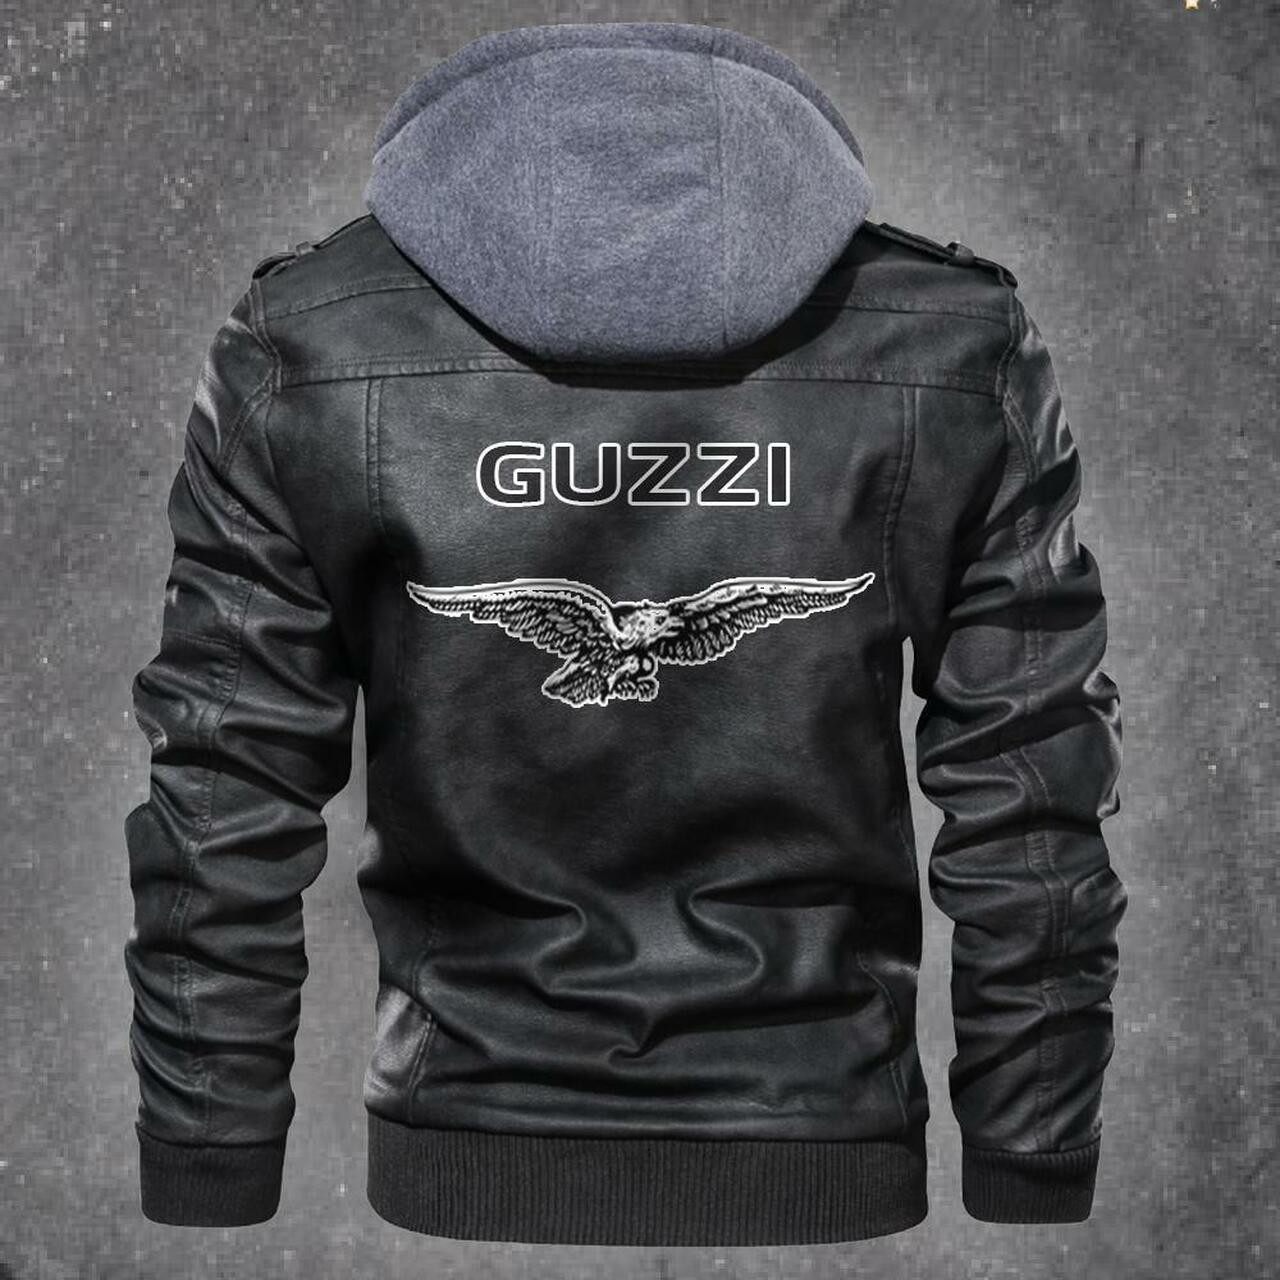 Top leather jacket Sells Best on Techcomshop 175